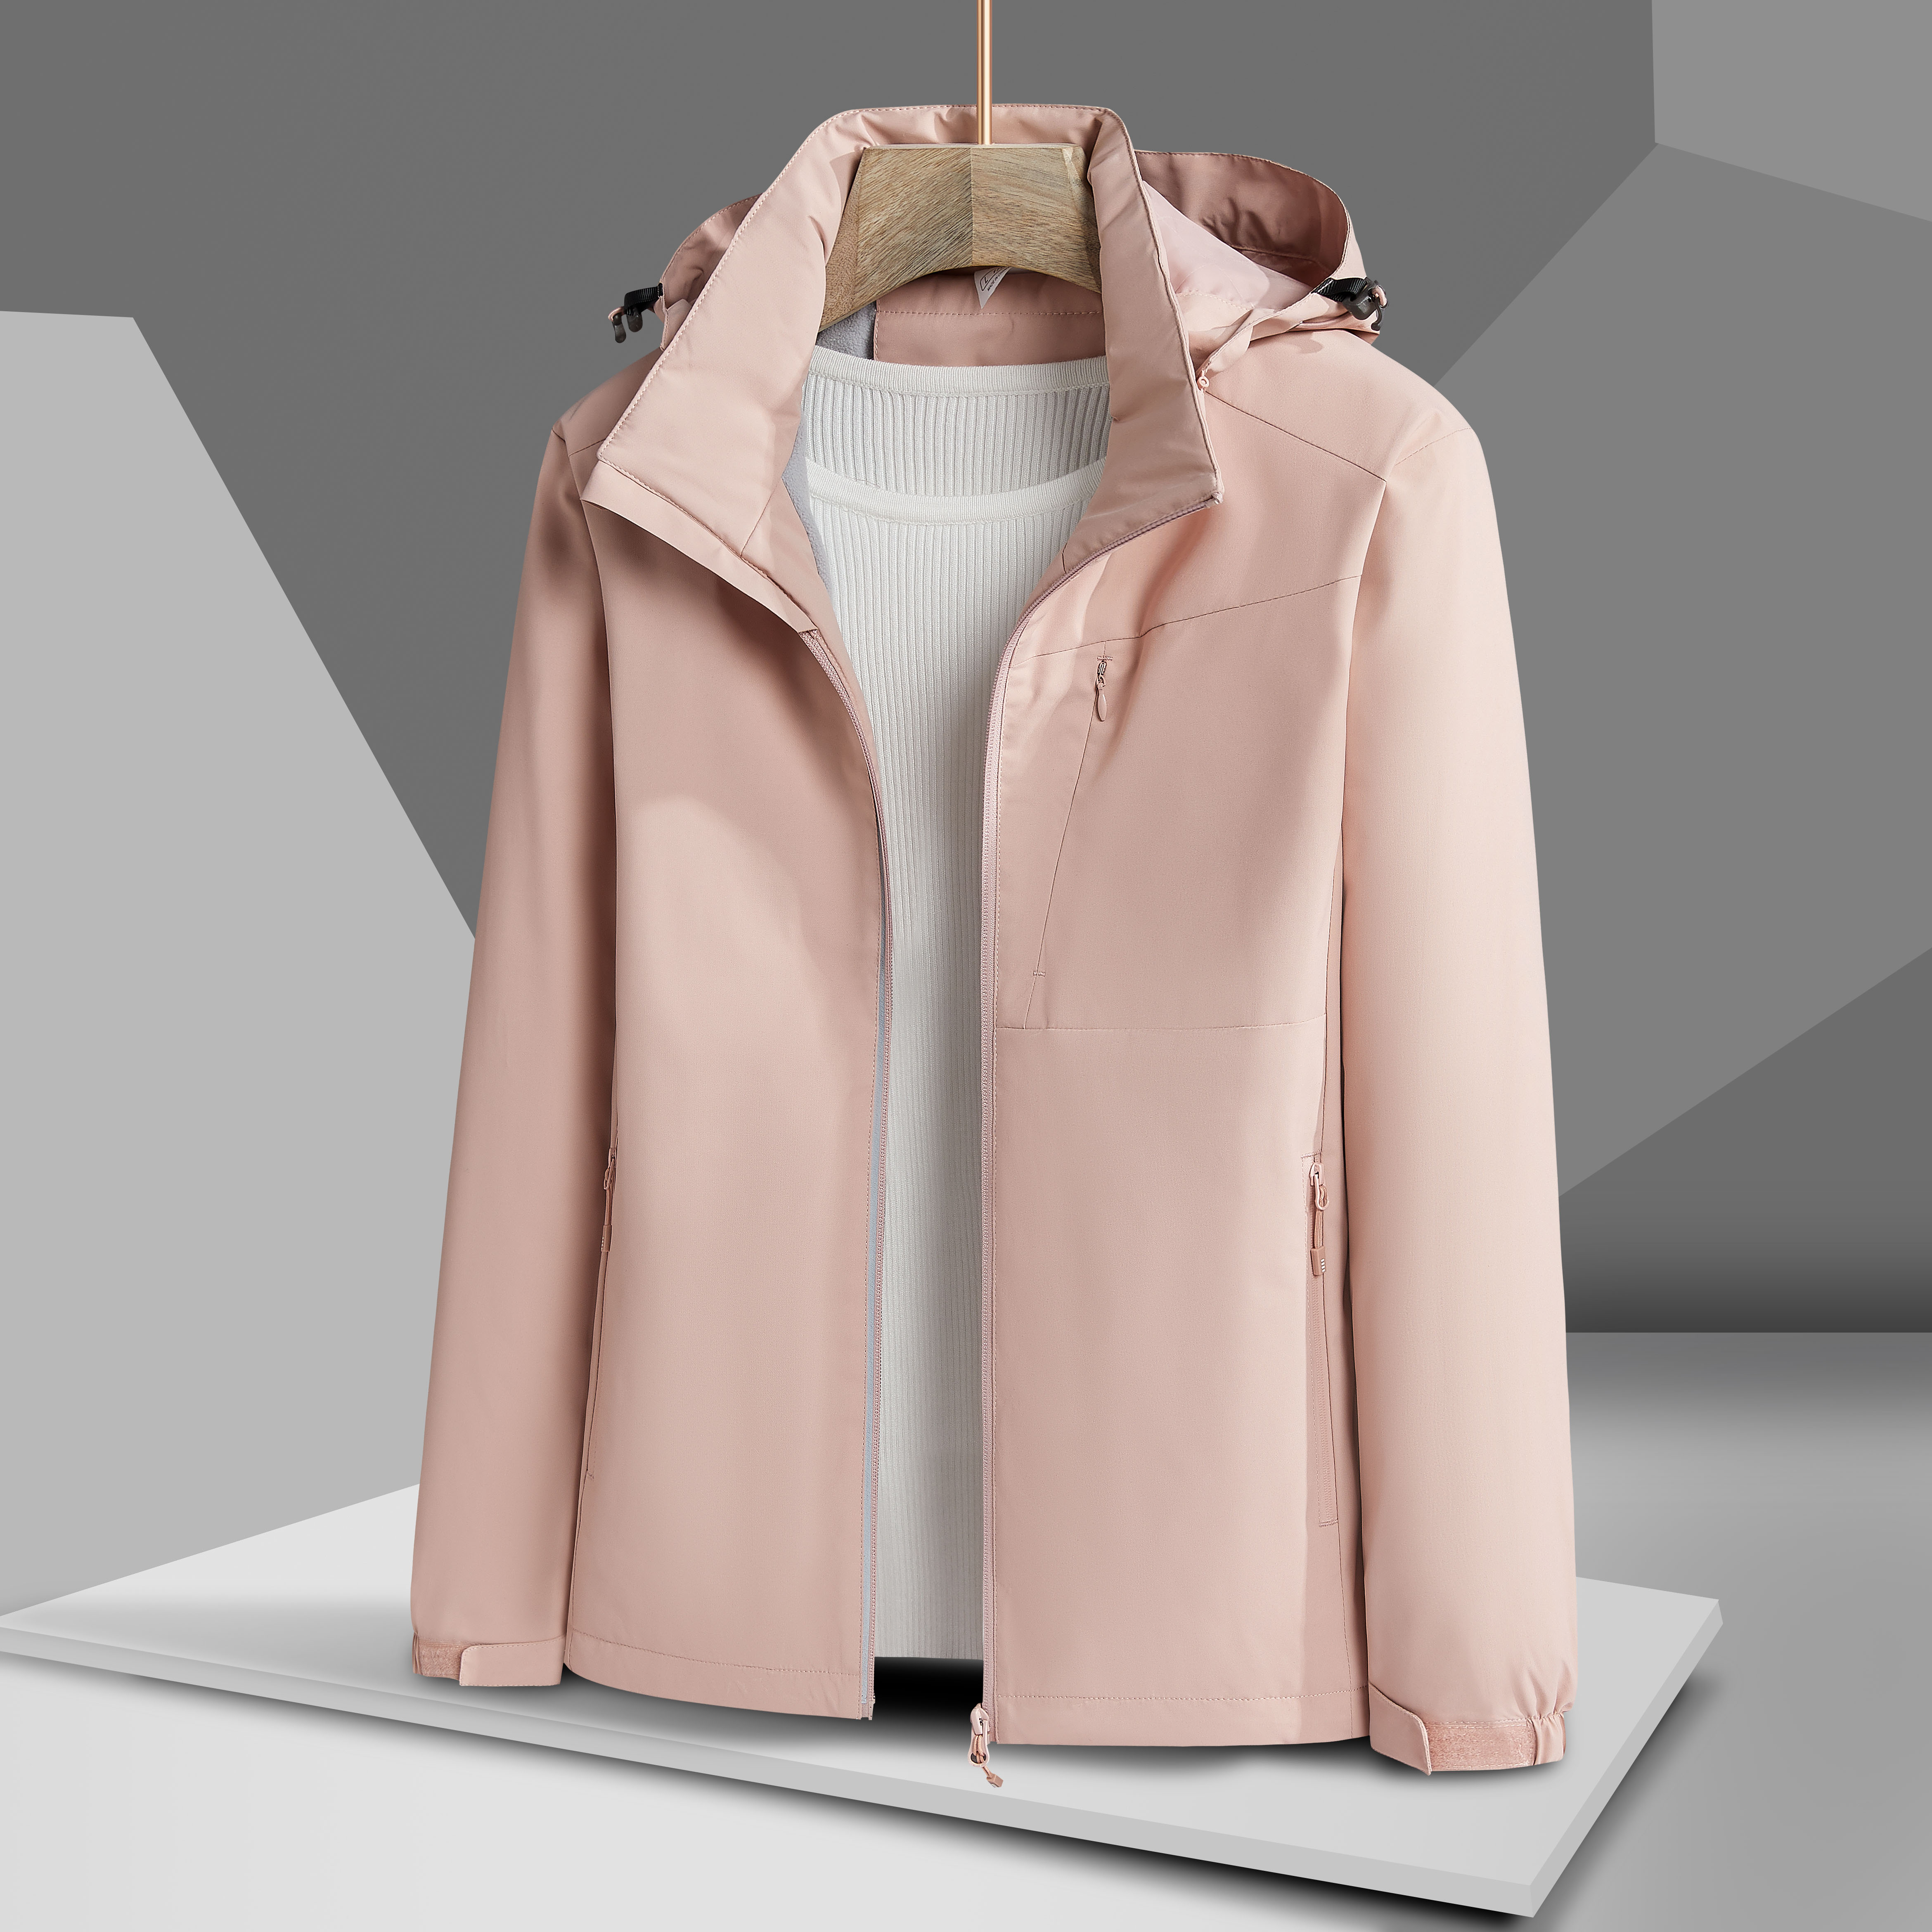 Shop Windproof Fleece  Light Outerwear for Women